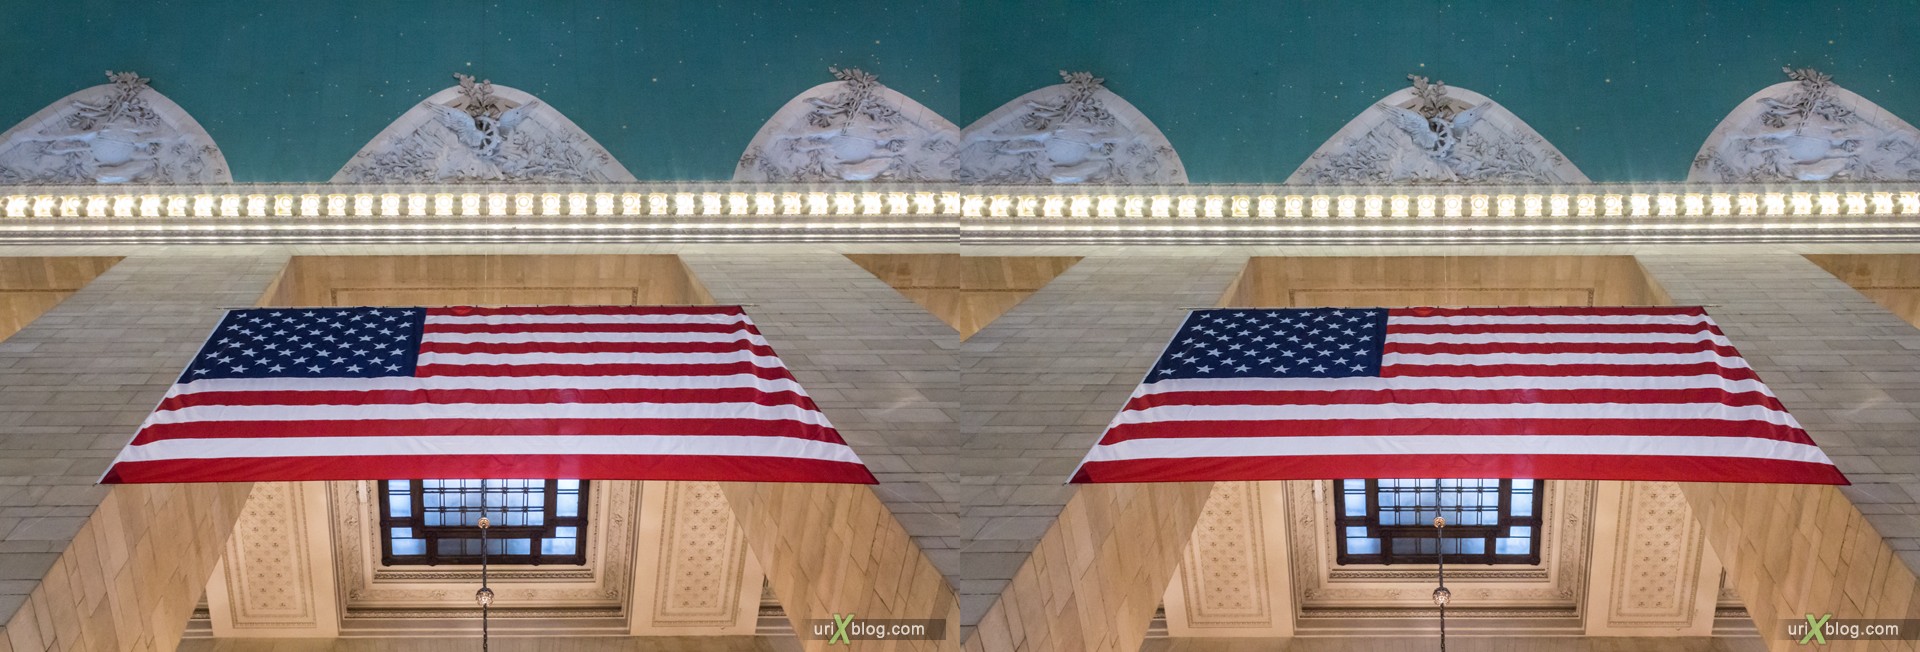 2013, Американский флаг, Grand Central Terminal, Нью-Йорк, США, 3D, перекрёстные стереопары, стерео, стереопара, стереопары